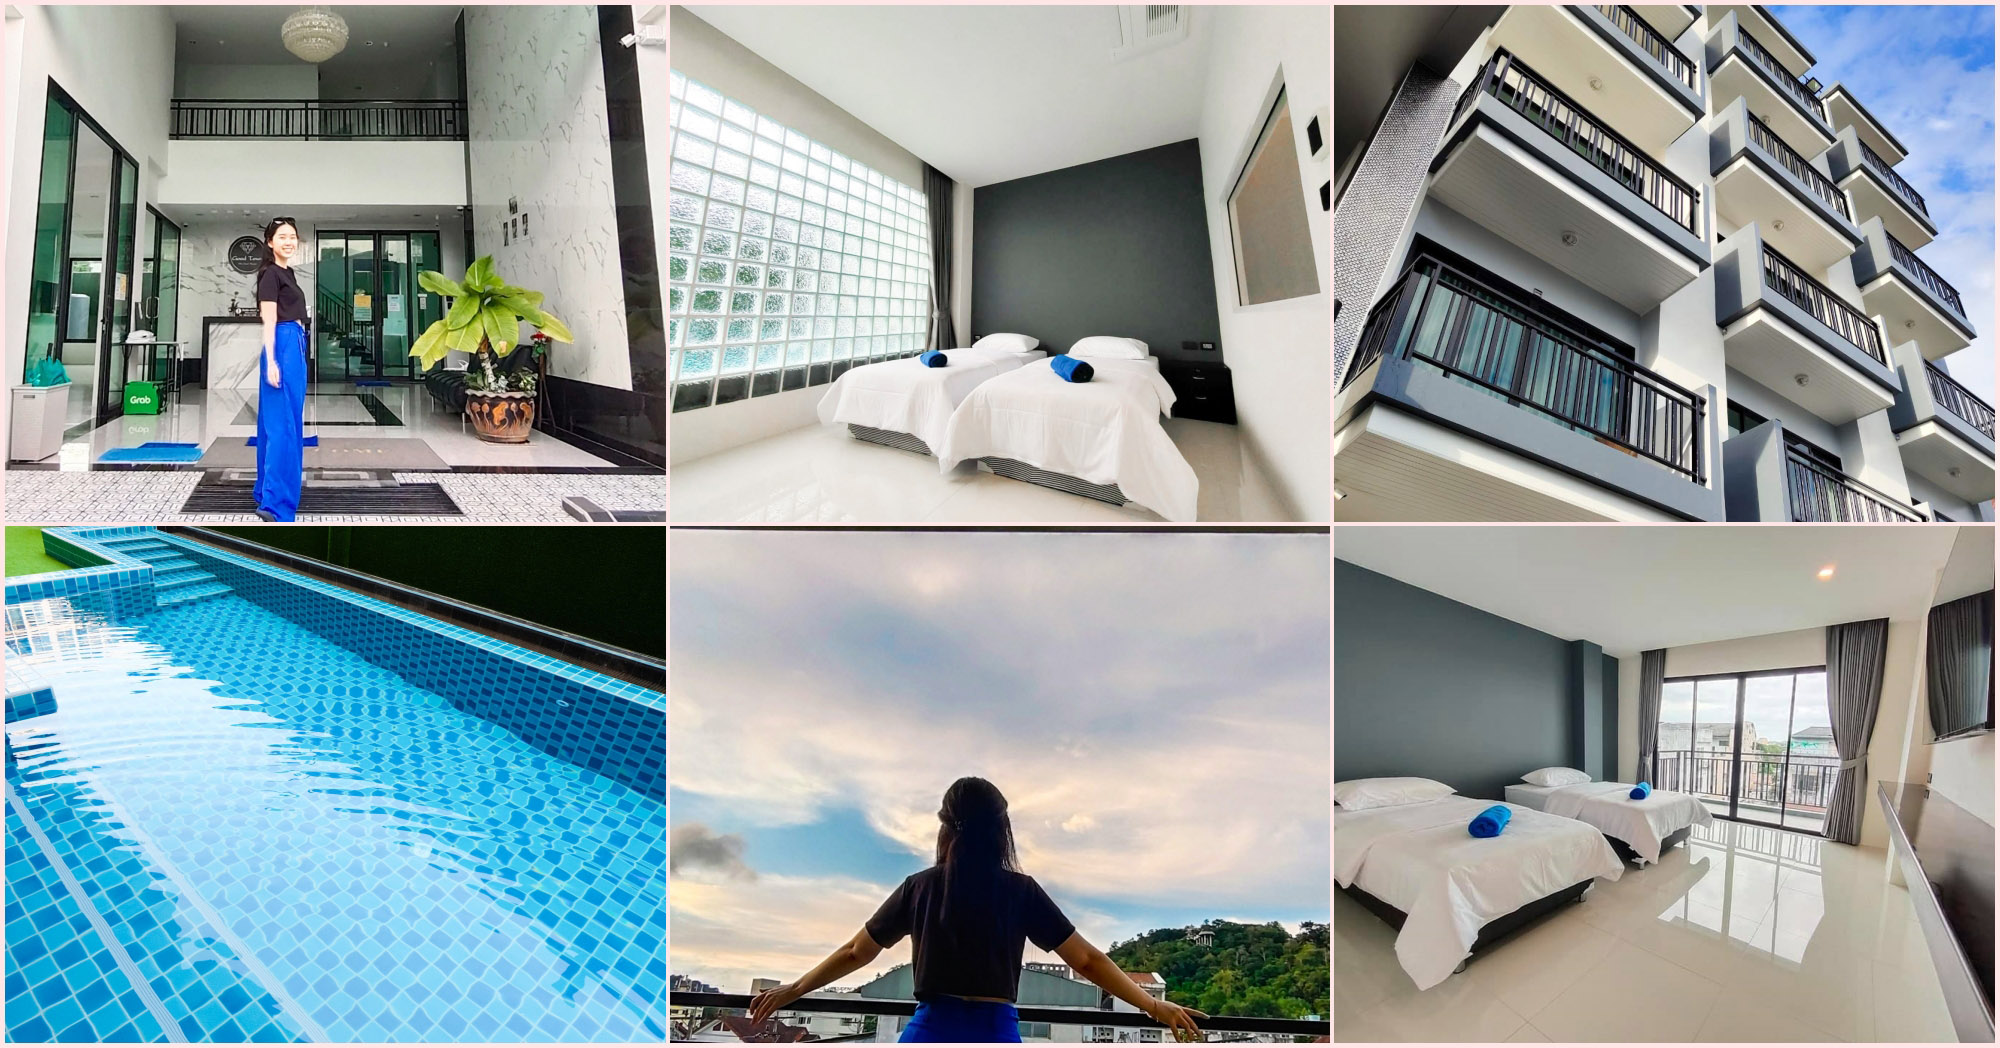 Goodtown Villa Hotel Phuket เขารัง โรงแรมสุดคูล สวยๆสบายๆ สะดวกสบาย เดินทางง่ายทำเลทองใจกลางเมืองภูเก็ต